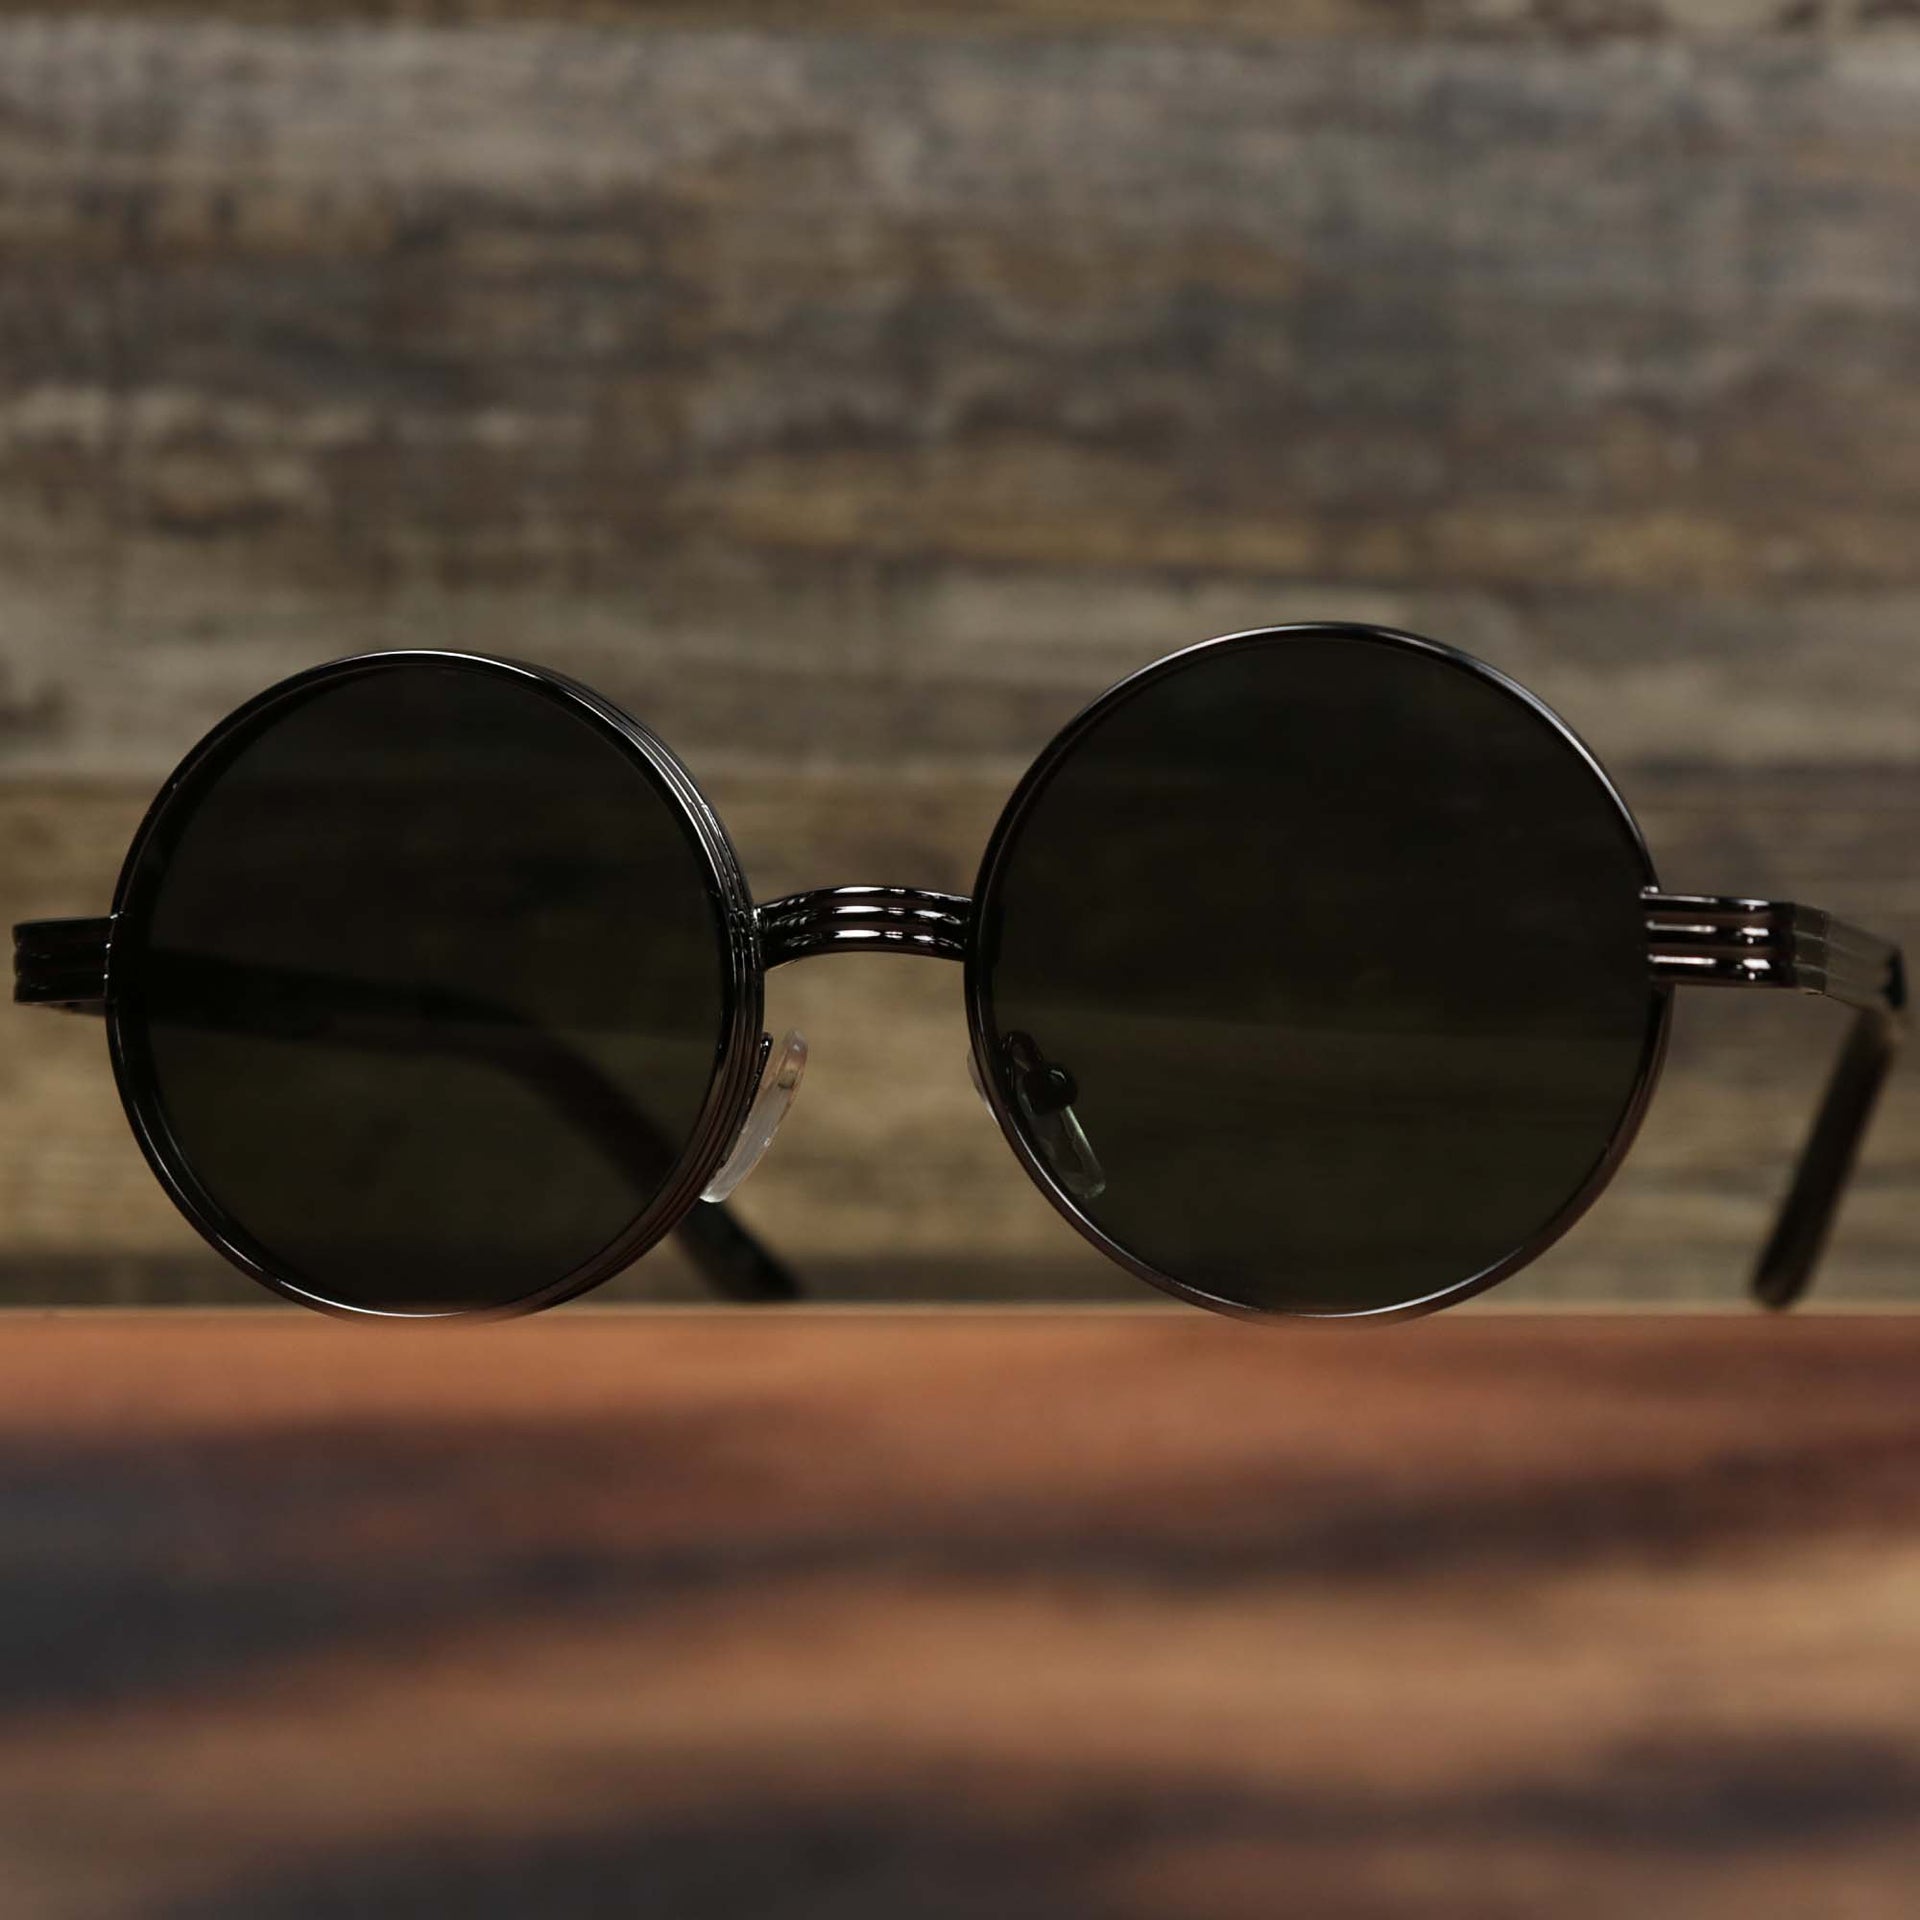 The Round 3 Row Frame Black Lens Sunglasses with Gunmetal Frame